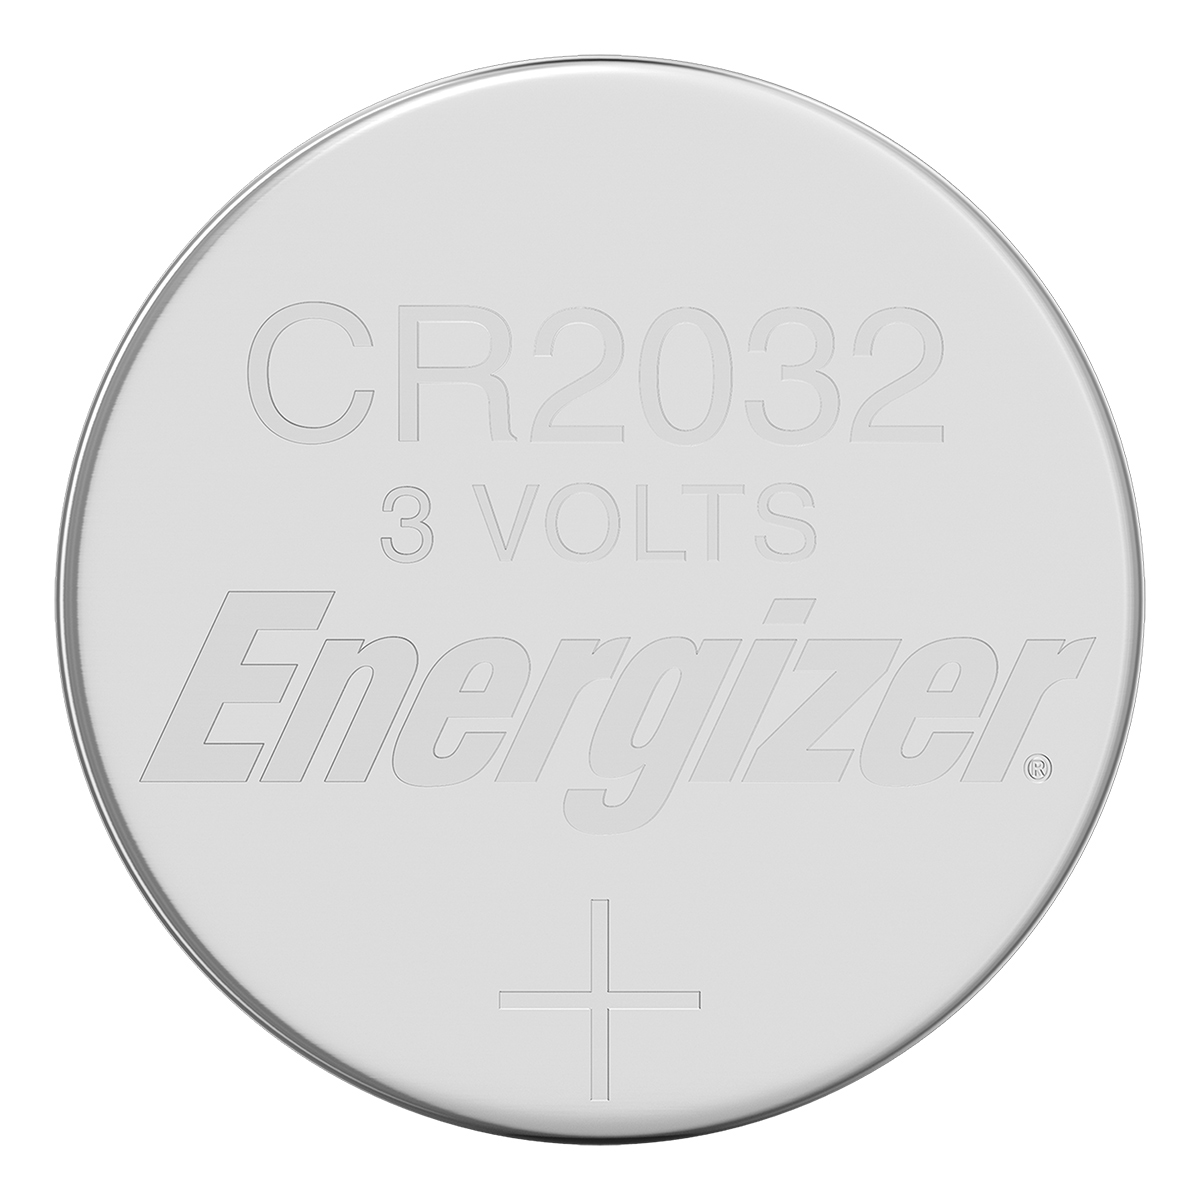 Energizer lithium batteries CR2032